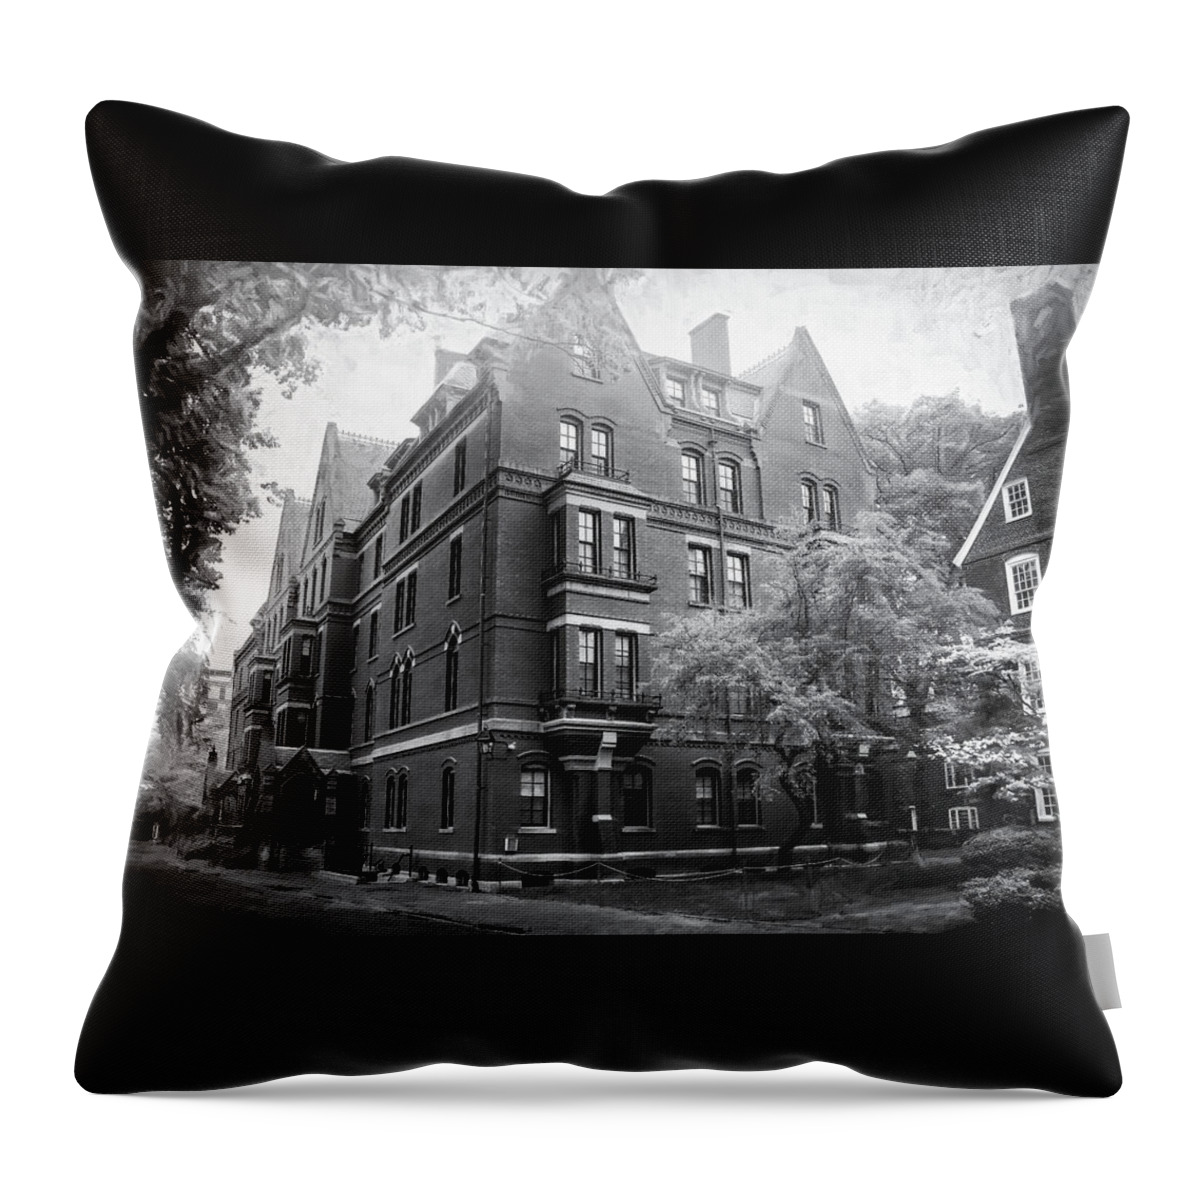 Harvard Yard Throw Pillow featuring the photograph Harvard Yard Cambridge Massachusetts Black and White by Carol Japp